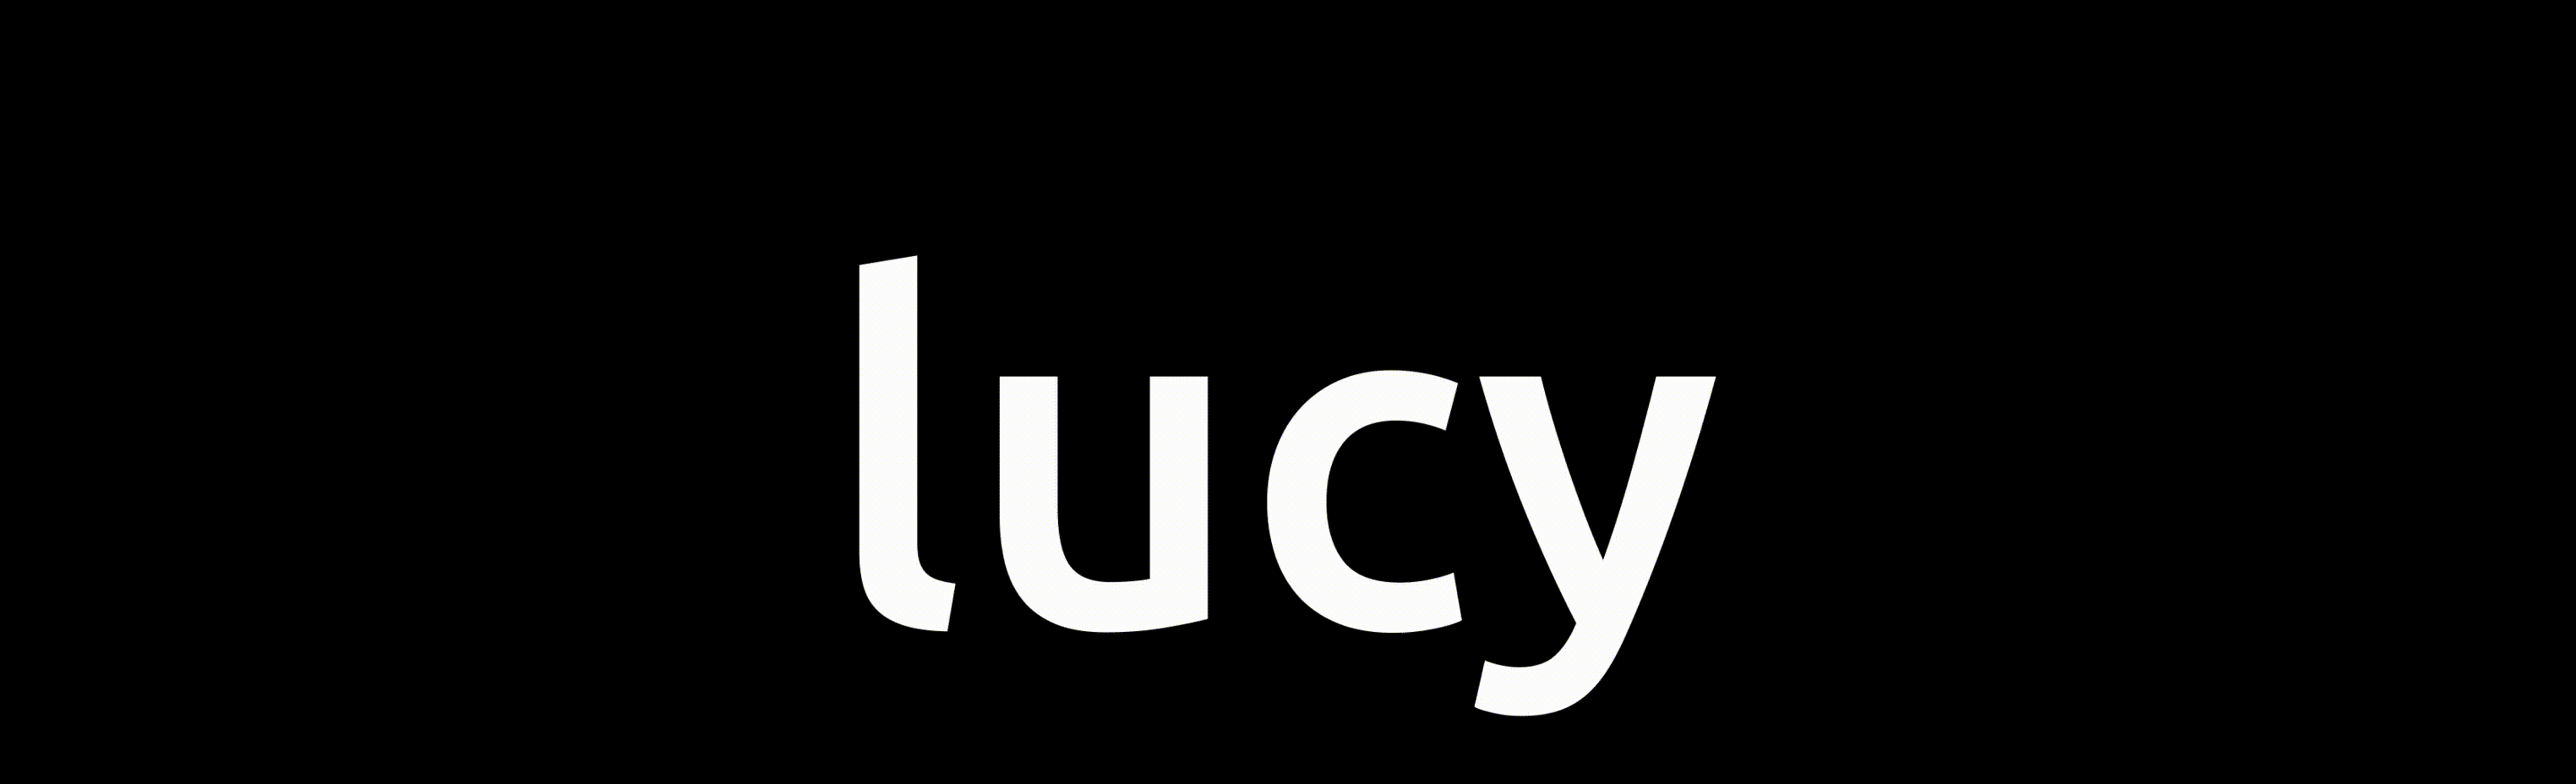 lucy platforms